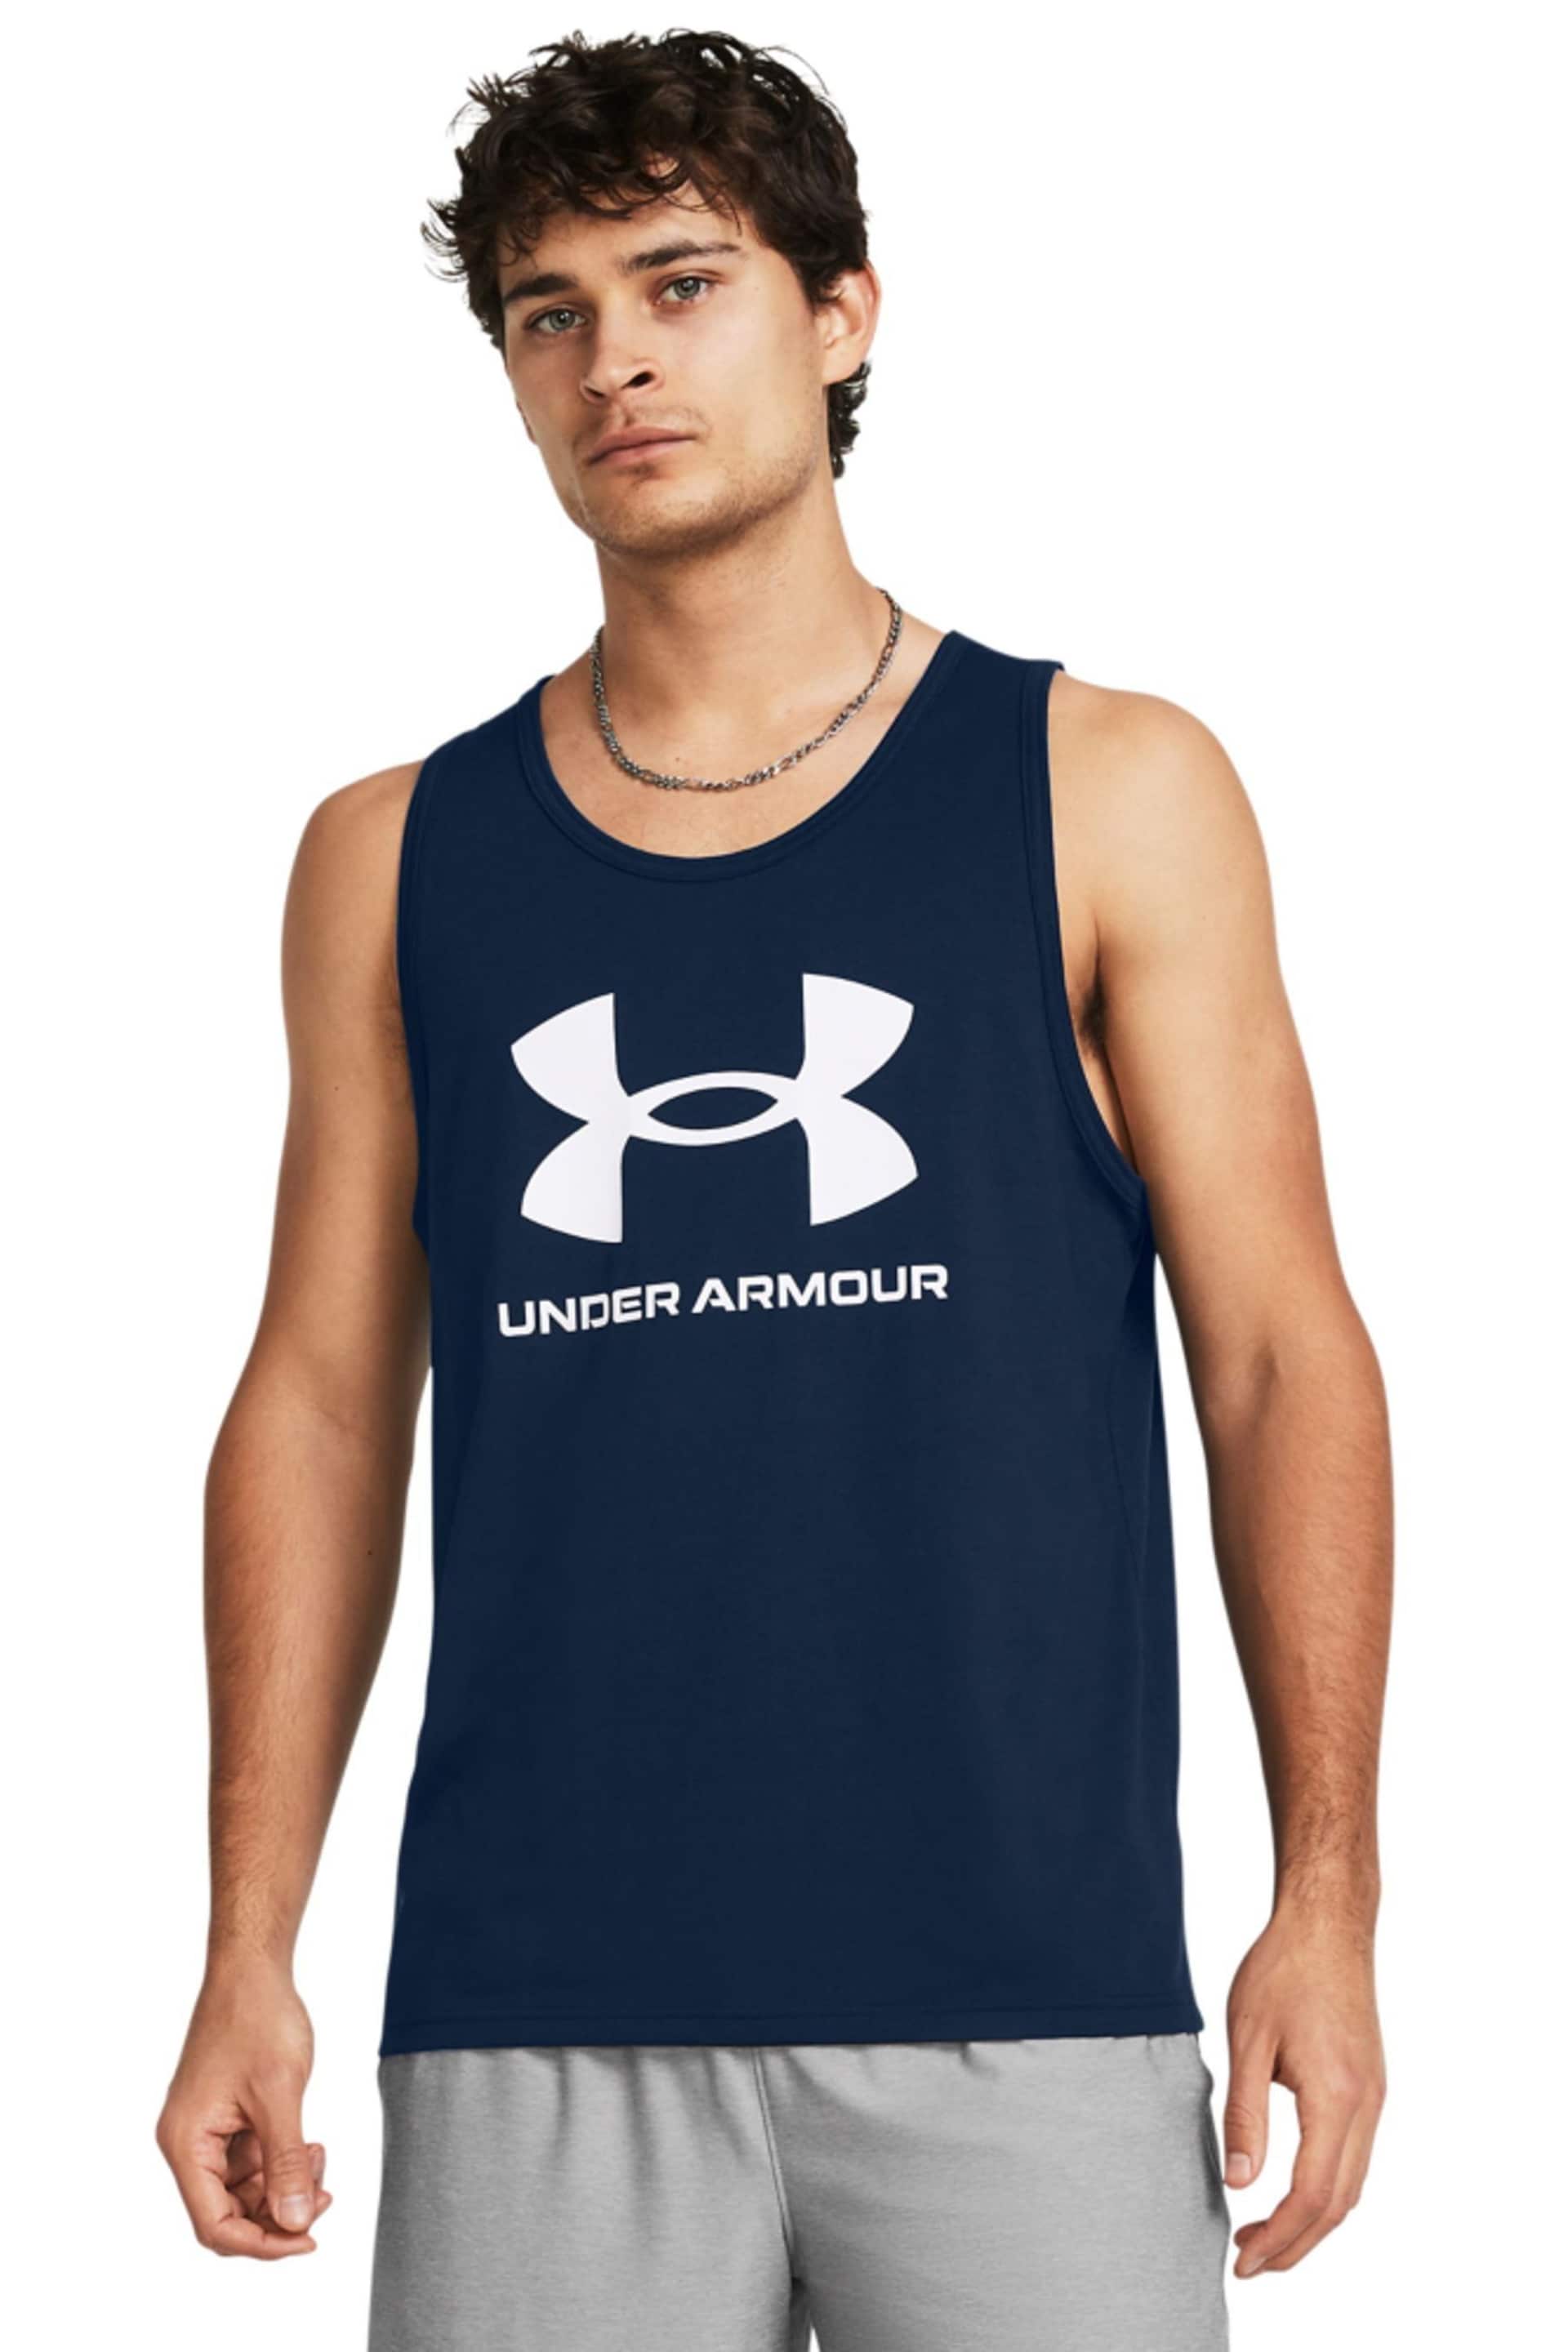 Under Armour Blue/White Sportstyle Logo Vest - Image 1 of 4